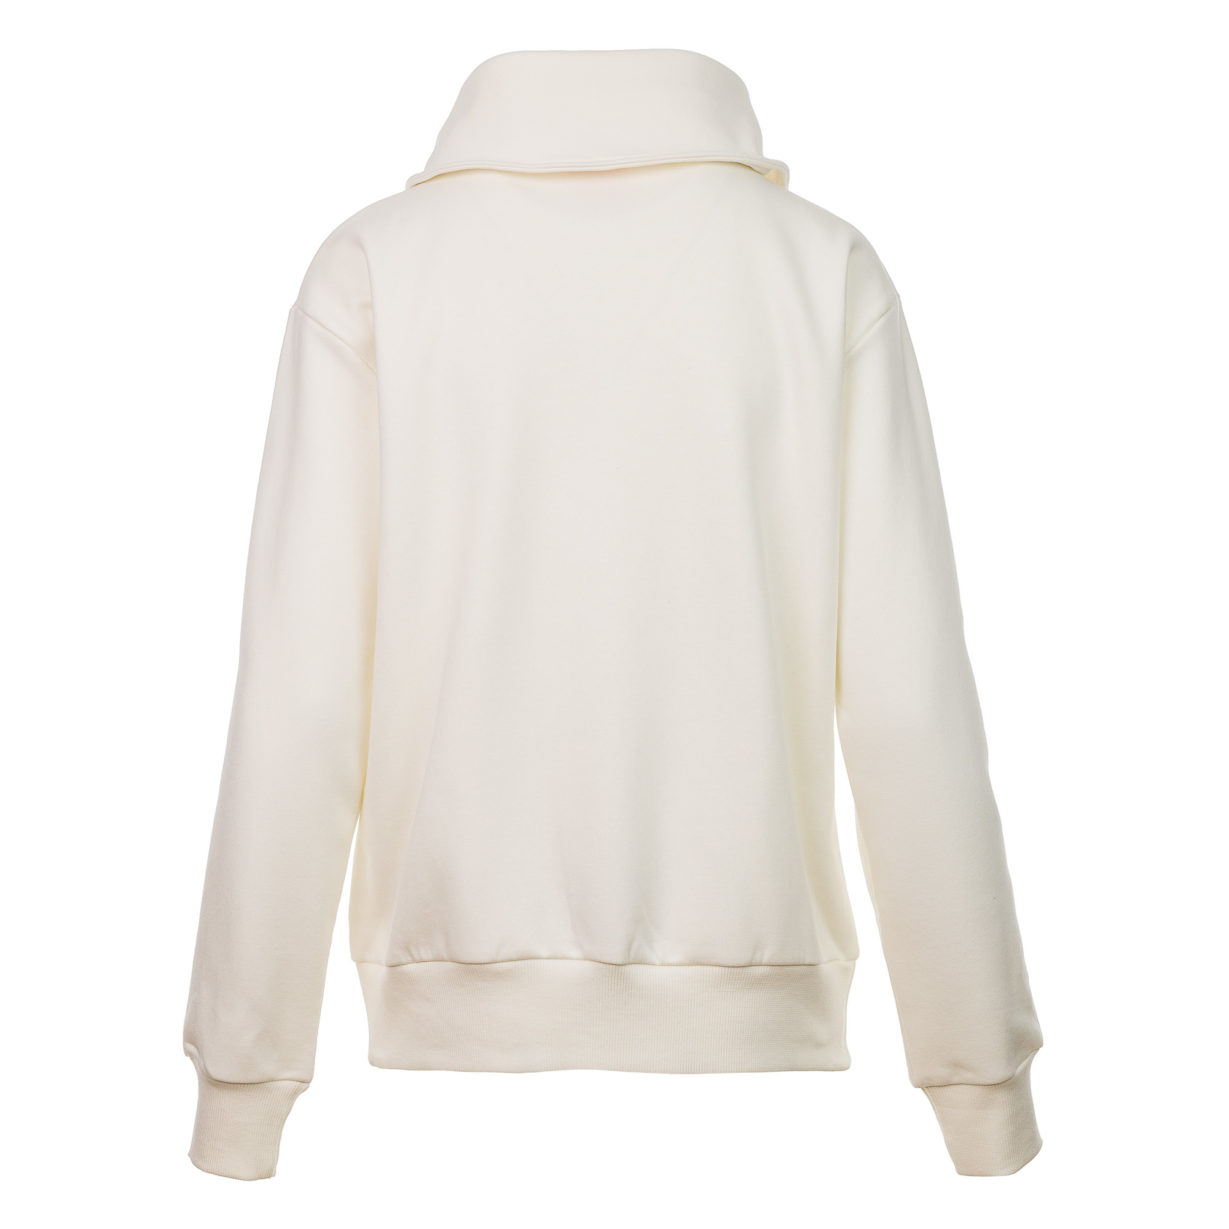 Hebedina - Troyer Sweatshirt Offwhite Rücken